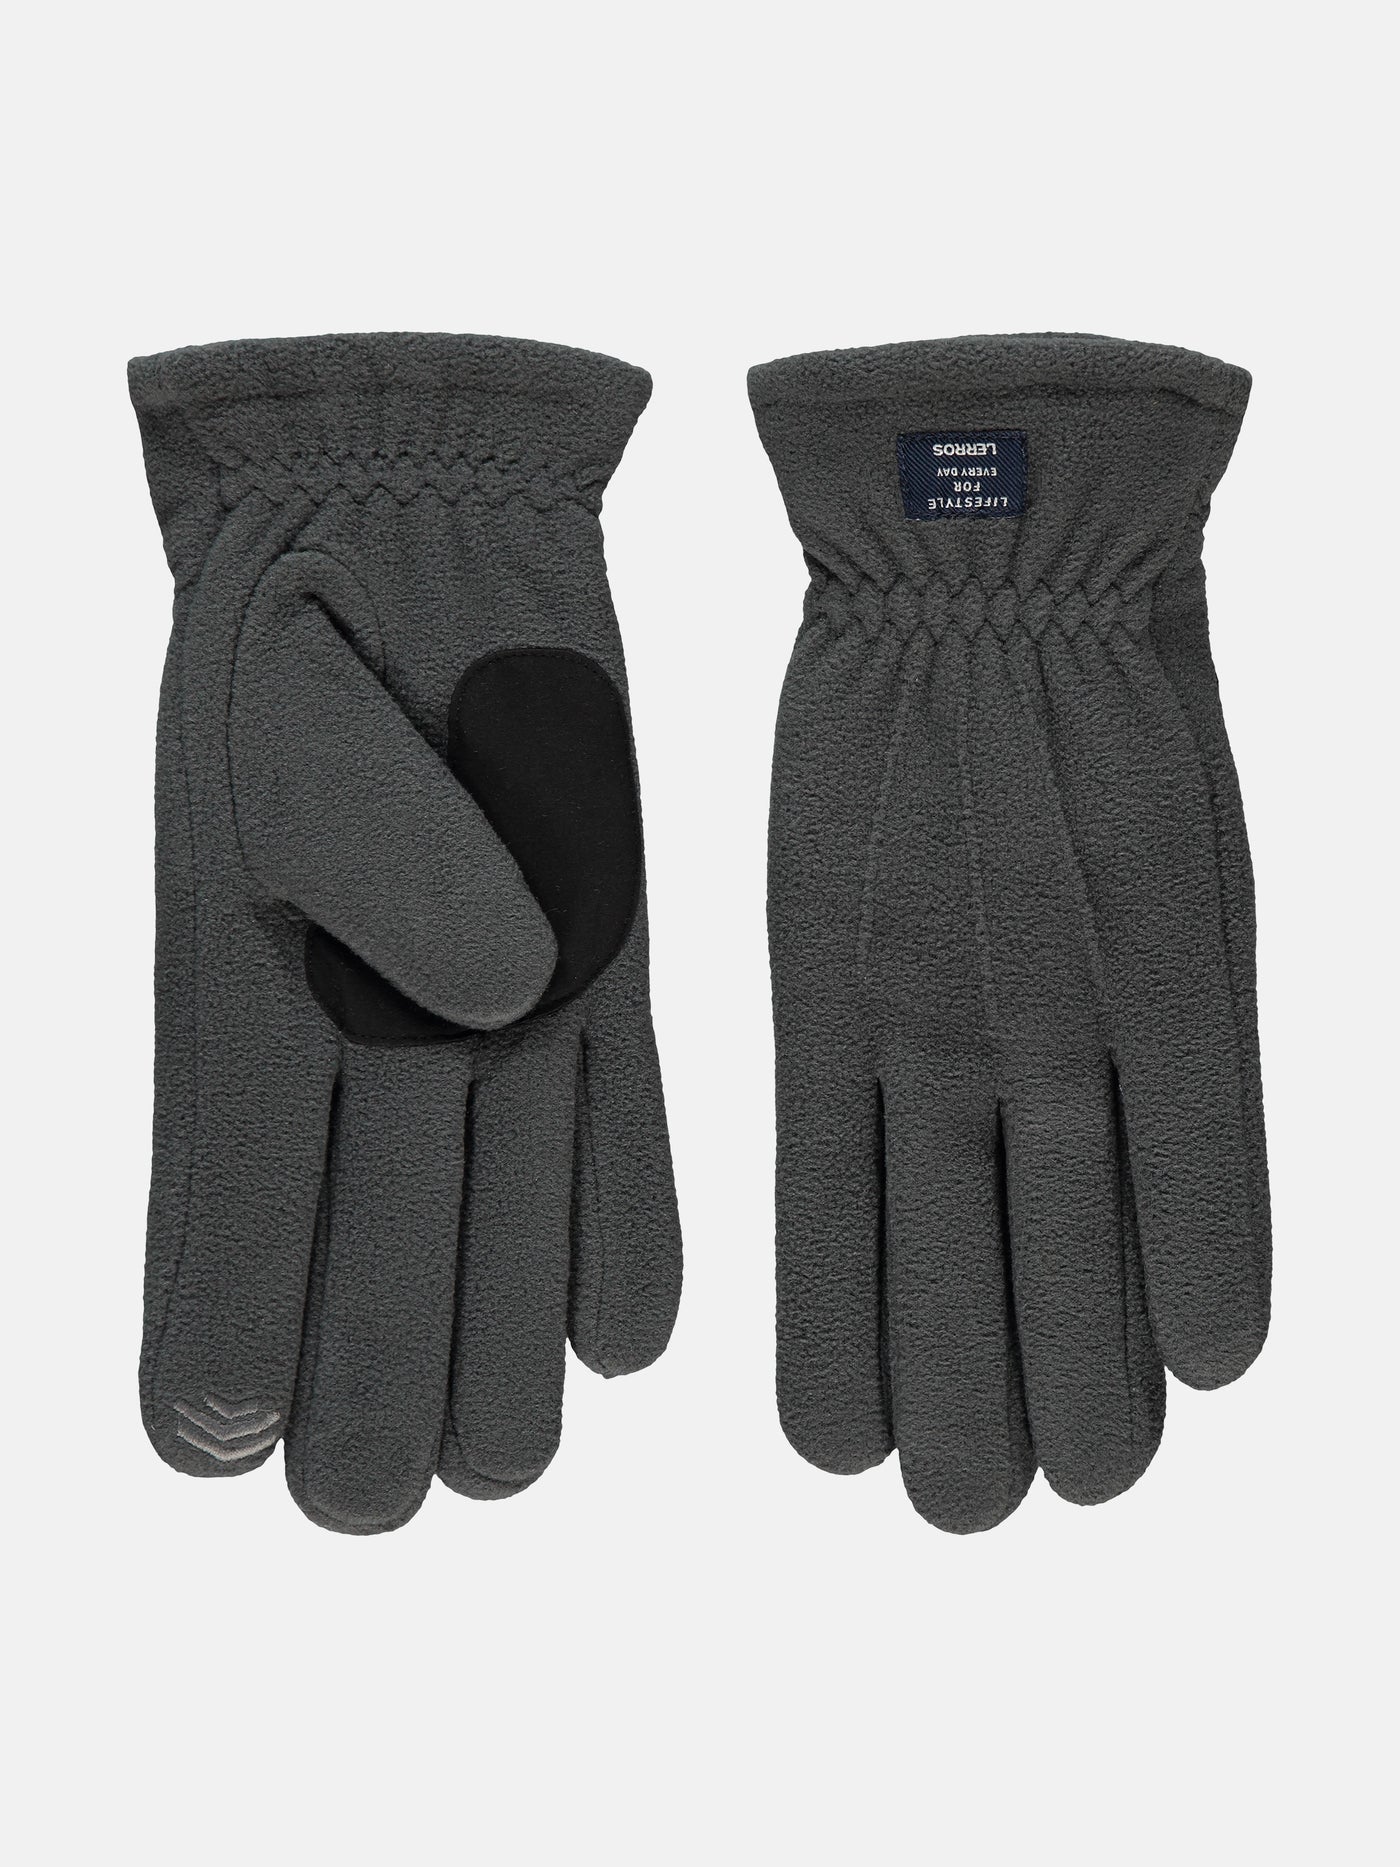 Fleece glove, plain colour